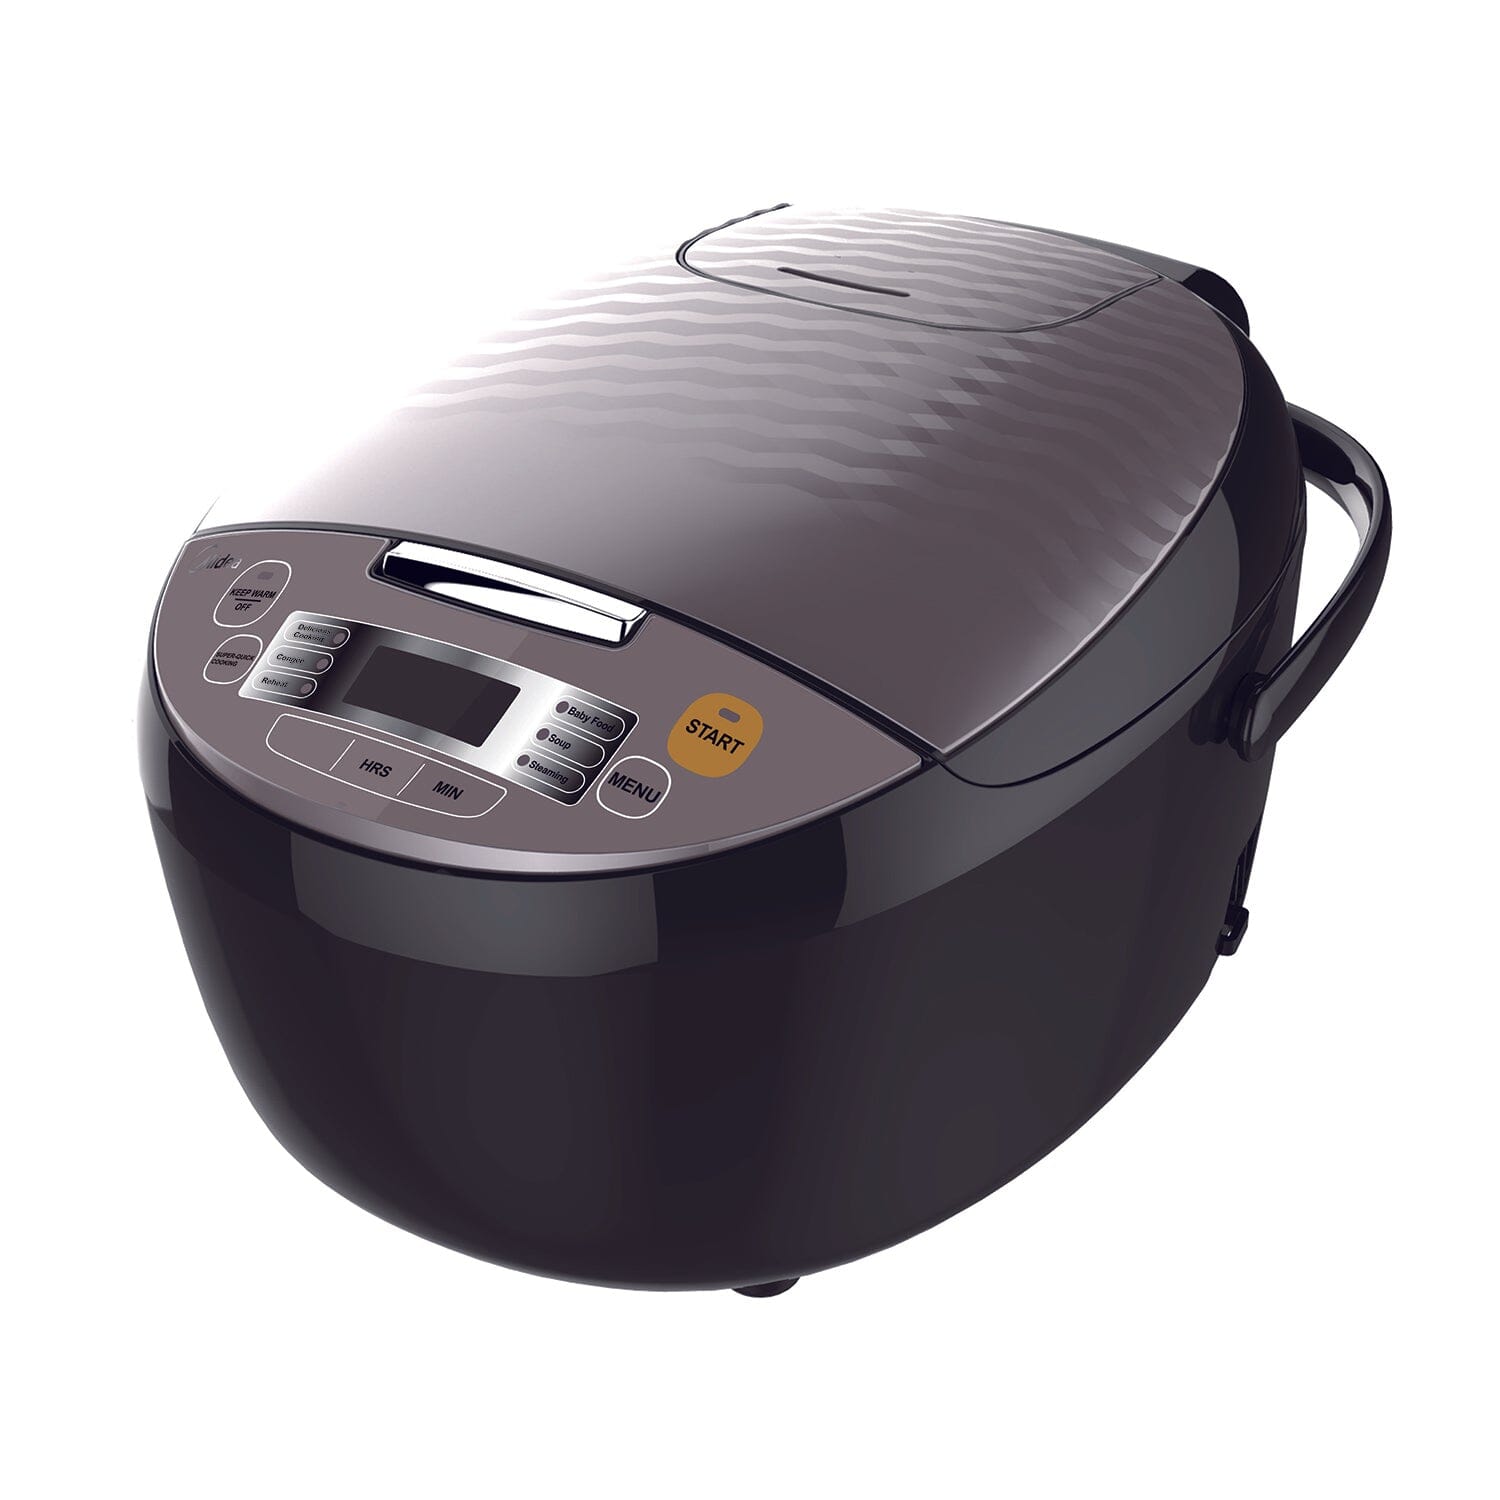 Midea 1.8L Automatic keep warm function Rice Cooker Black,MMR5018 Midea 